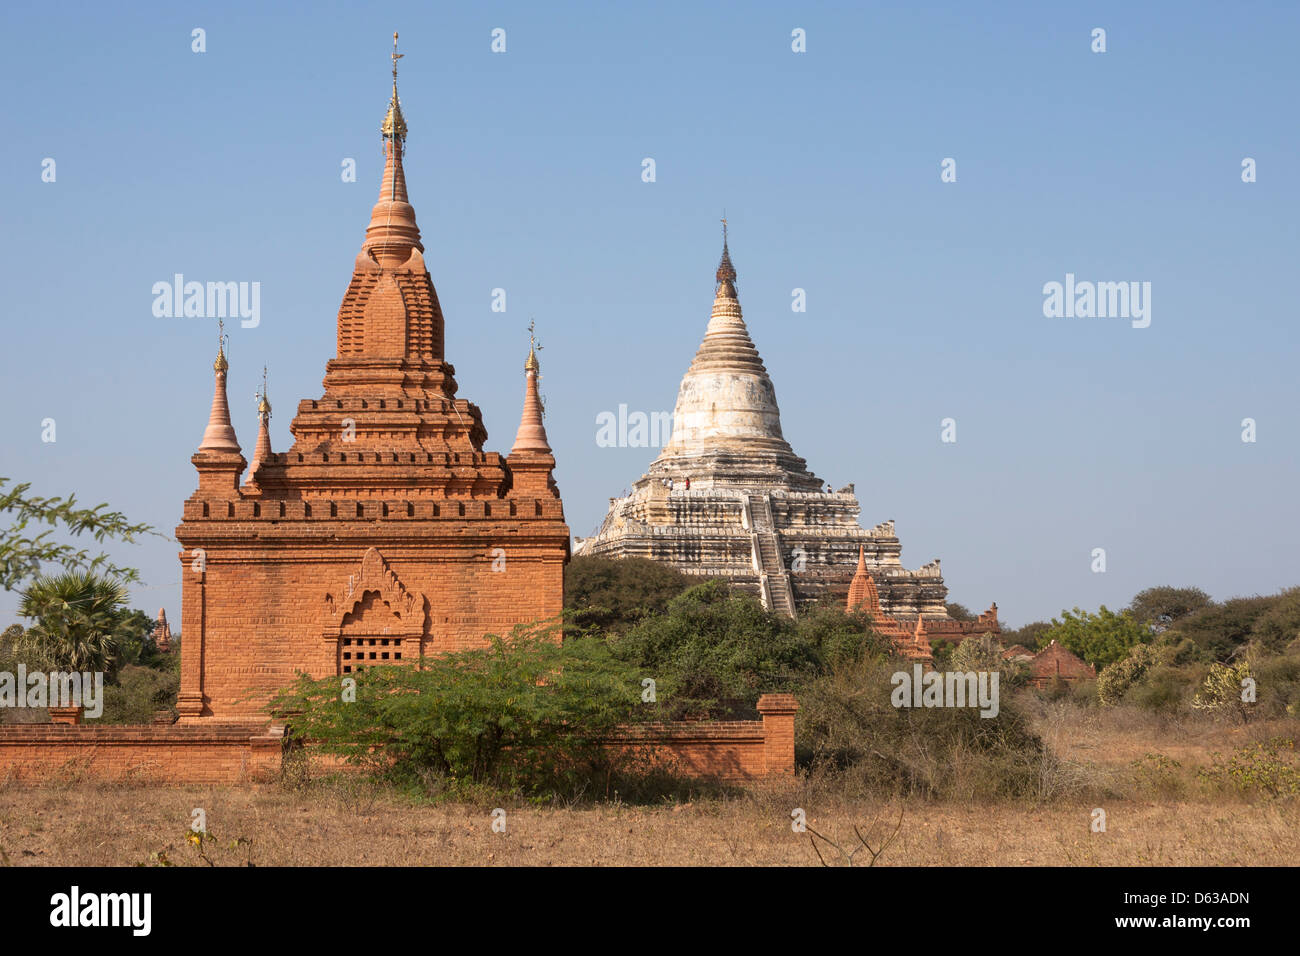 Shwesandaw Pagoda, white pagoda at back, Old Bagan, Bagan, Myanmar, (Burma) Stock Photo